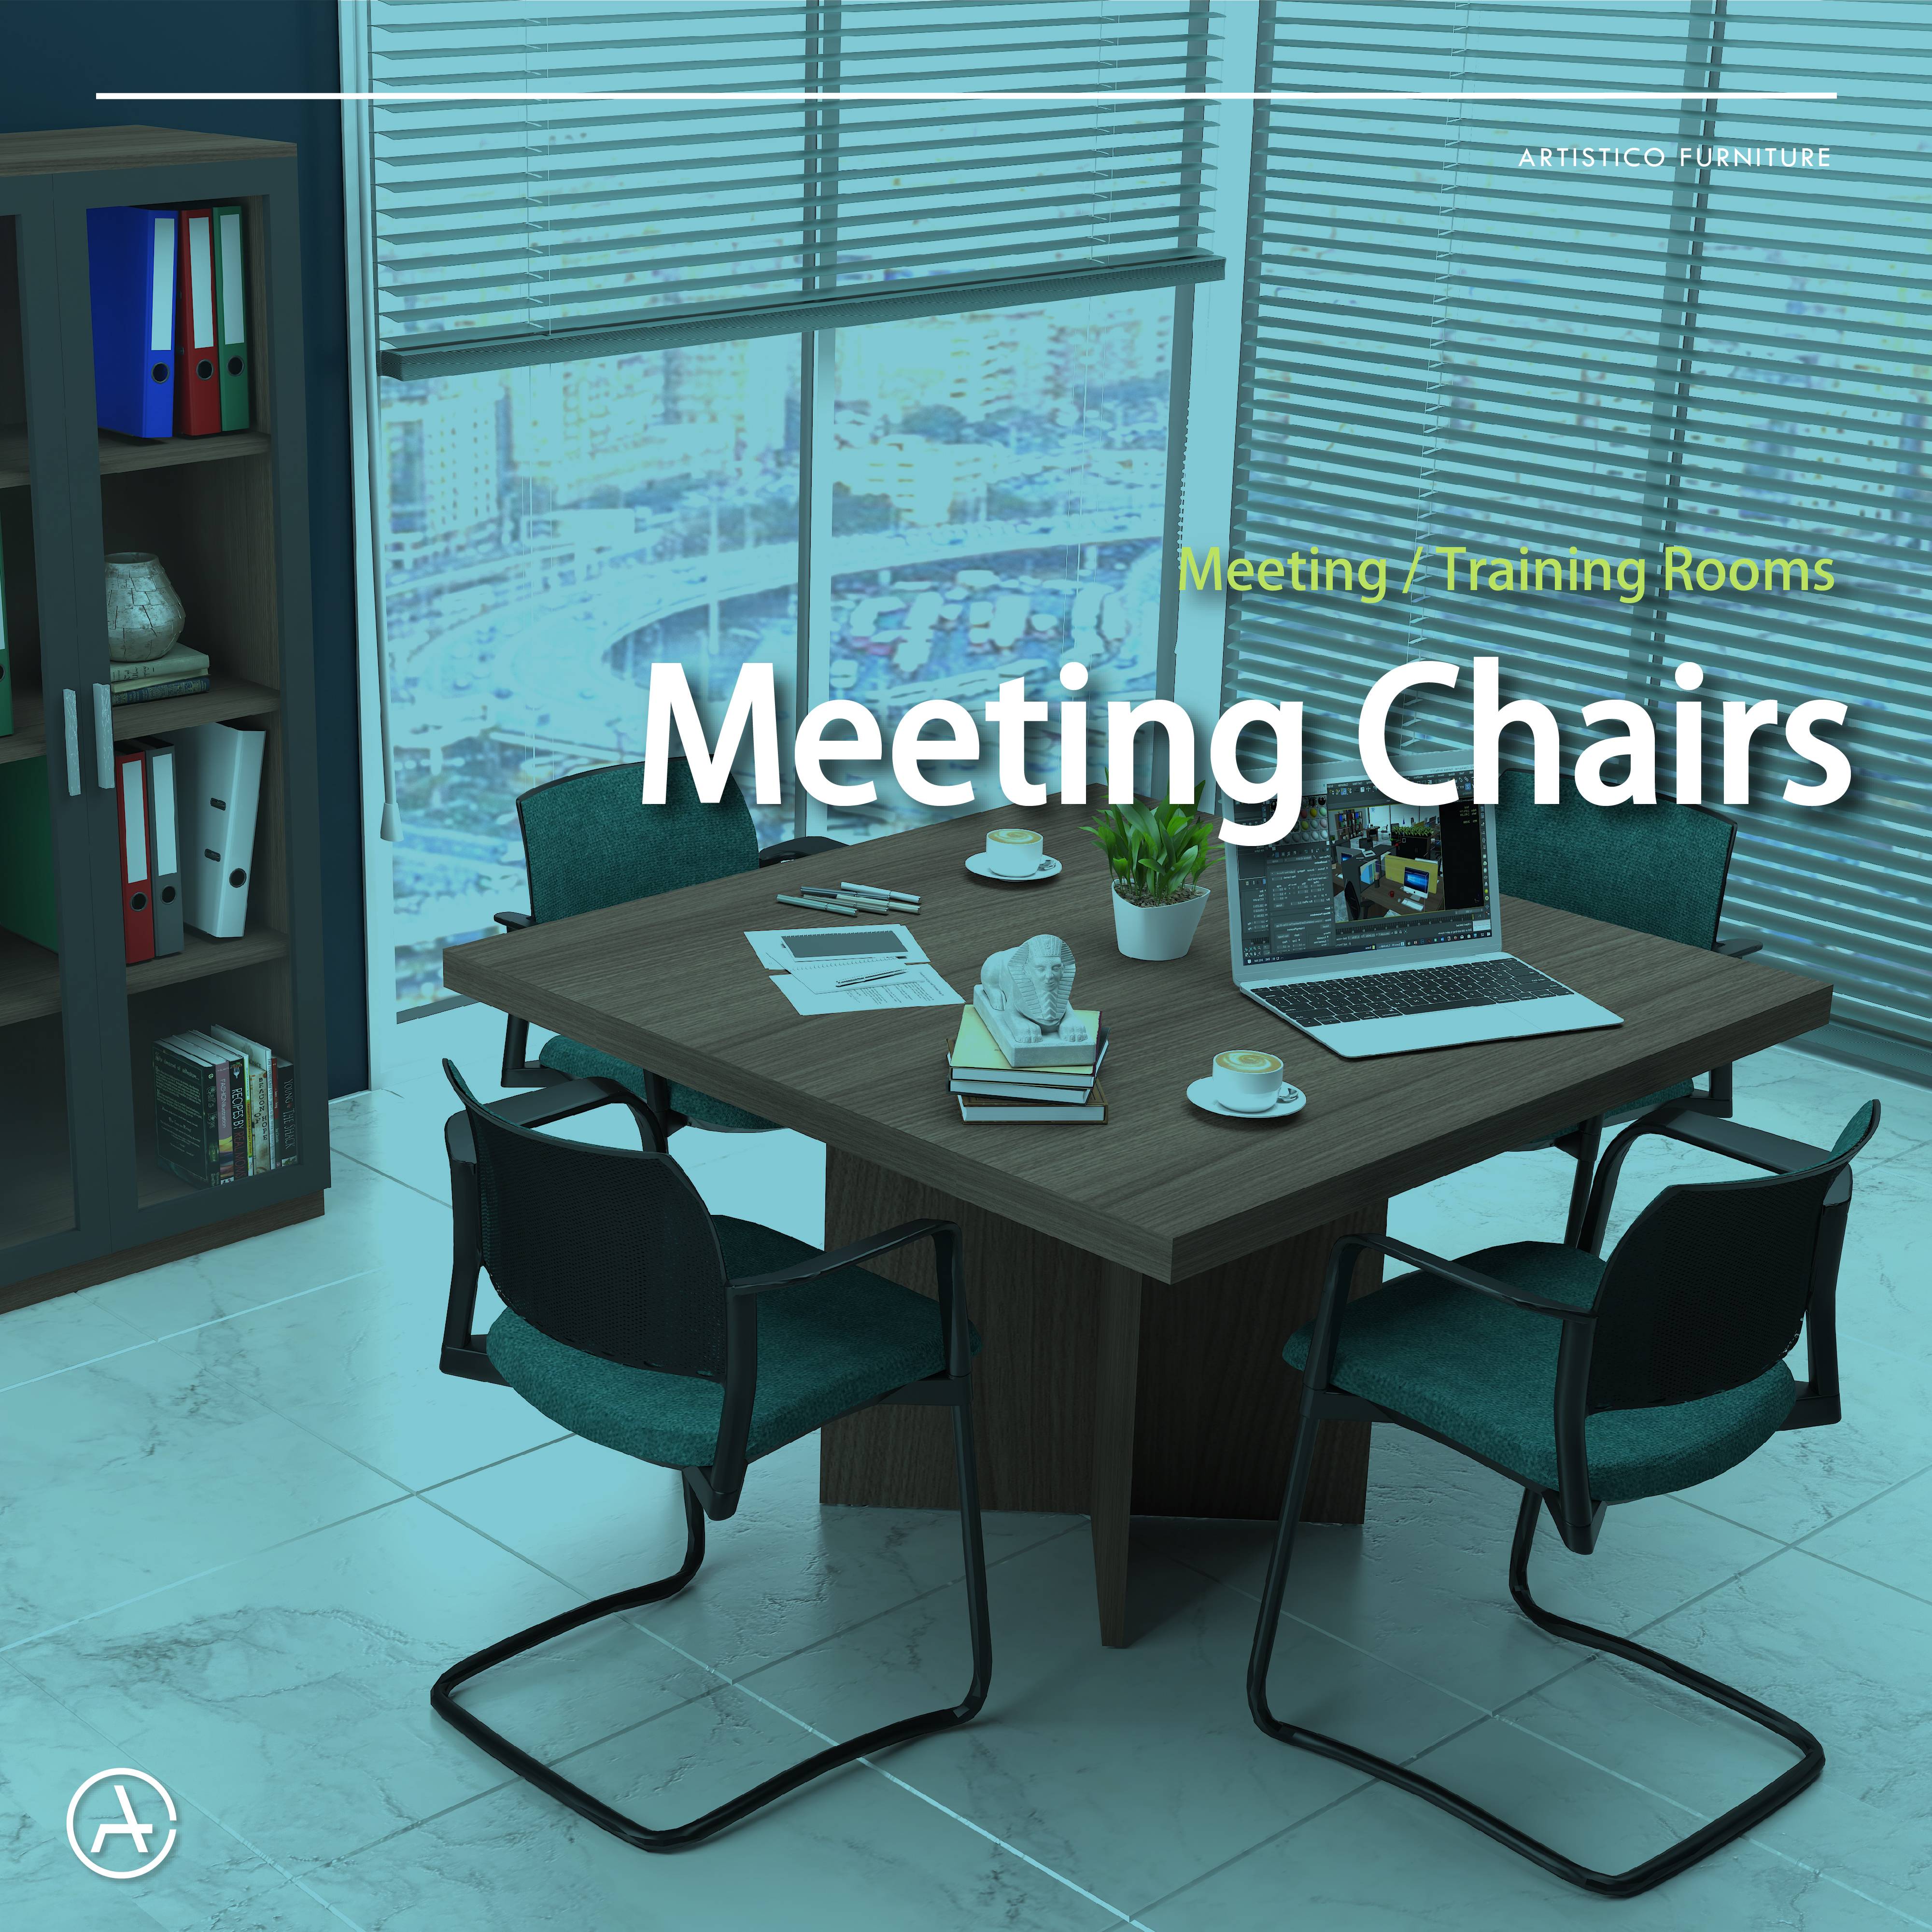 Meeting / Training Rooms